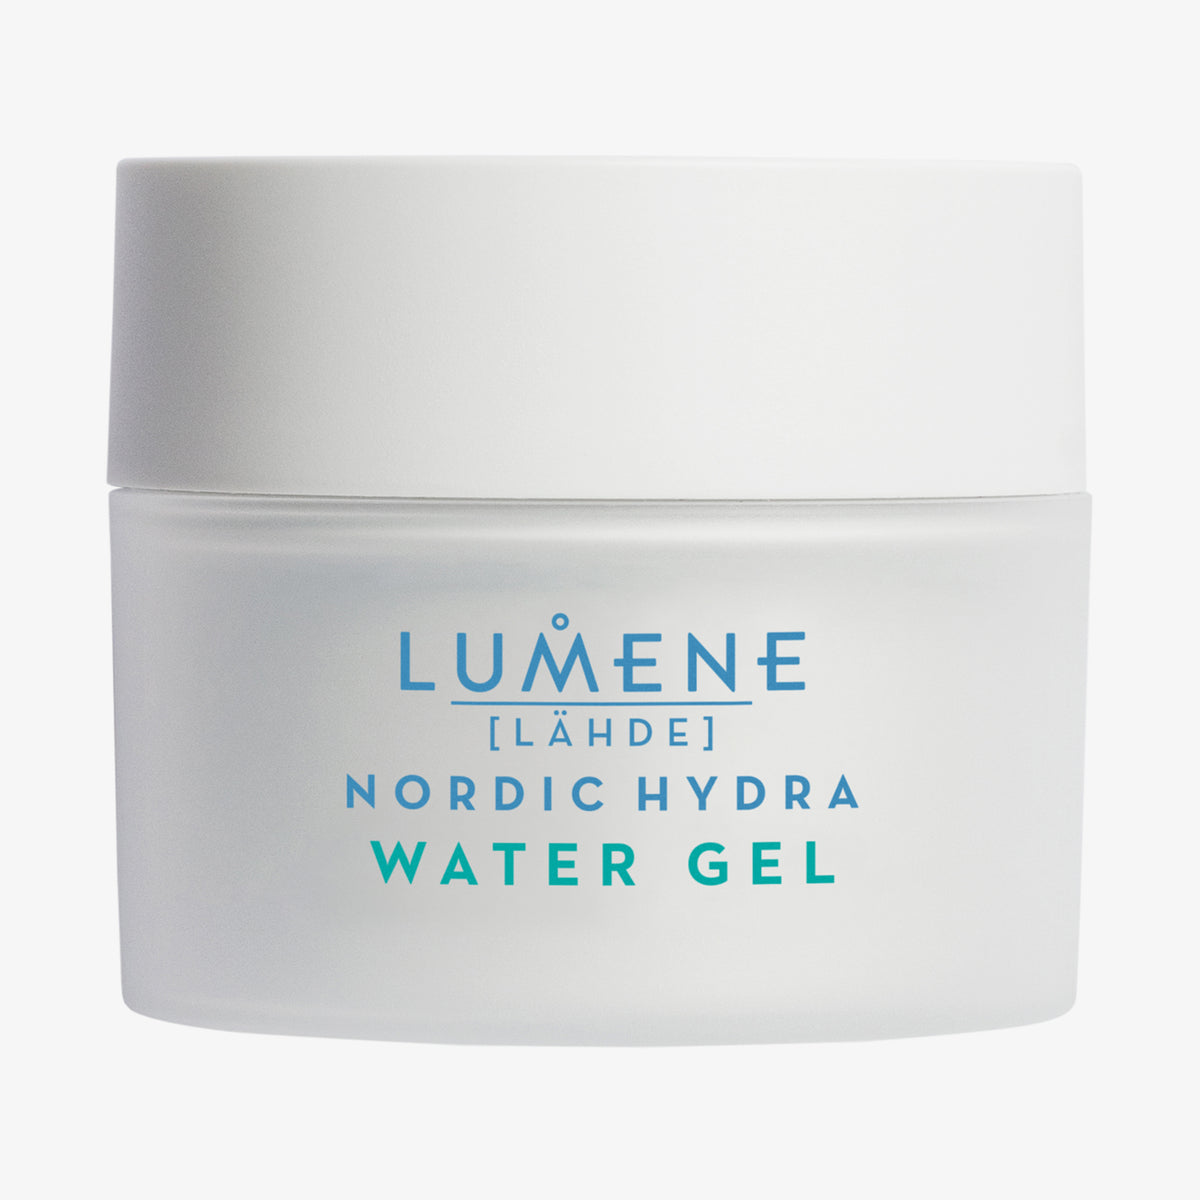 Lumene | NORDIC HYDRA [LAHDE] Water Gel